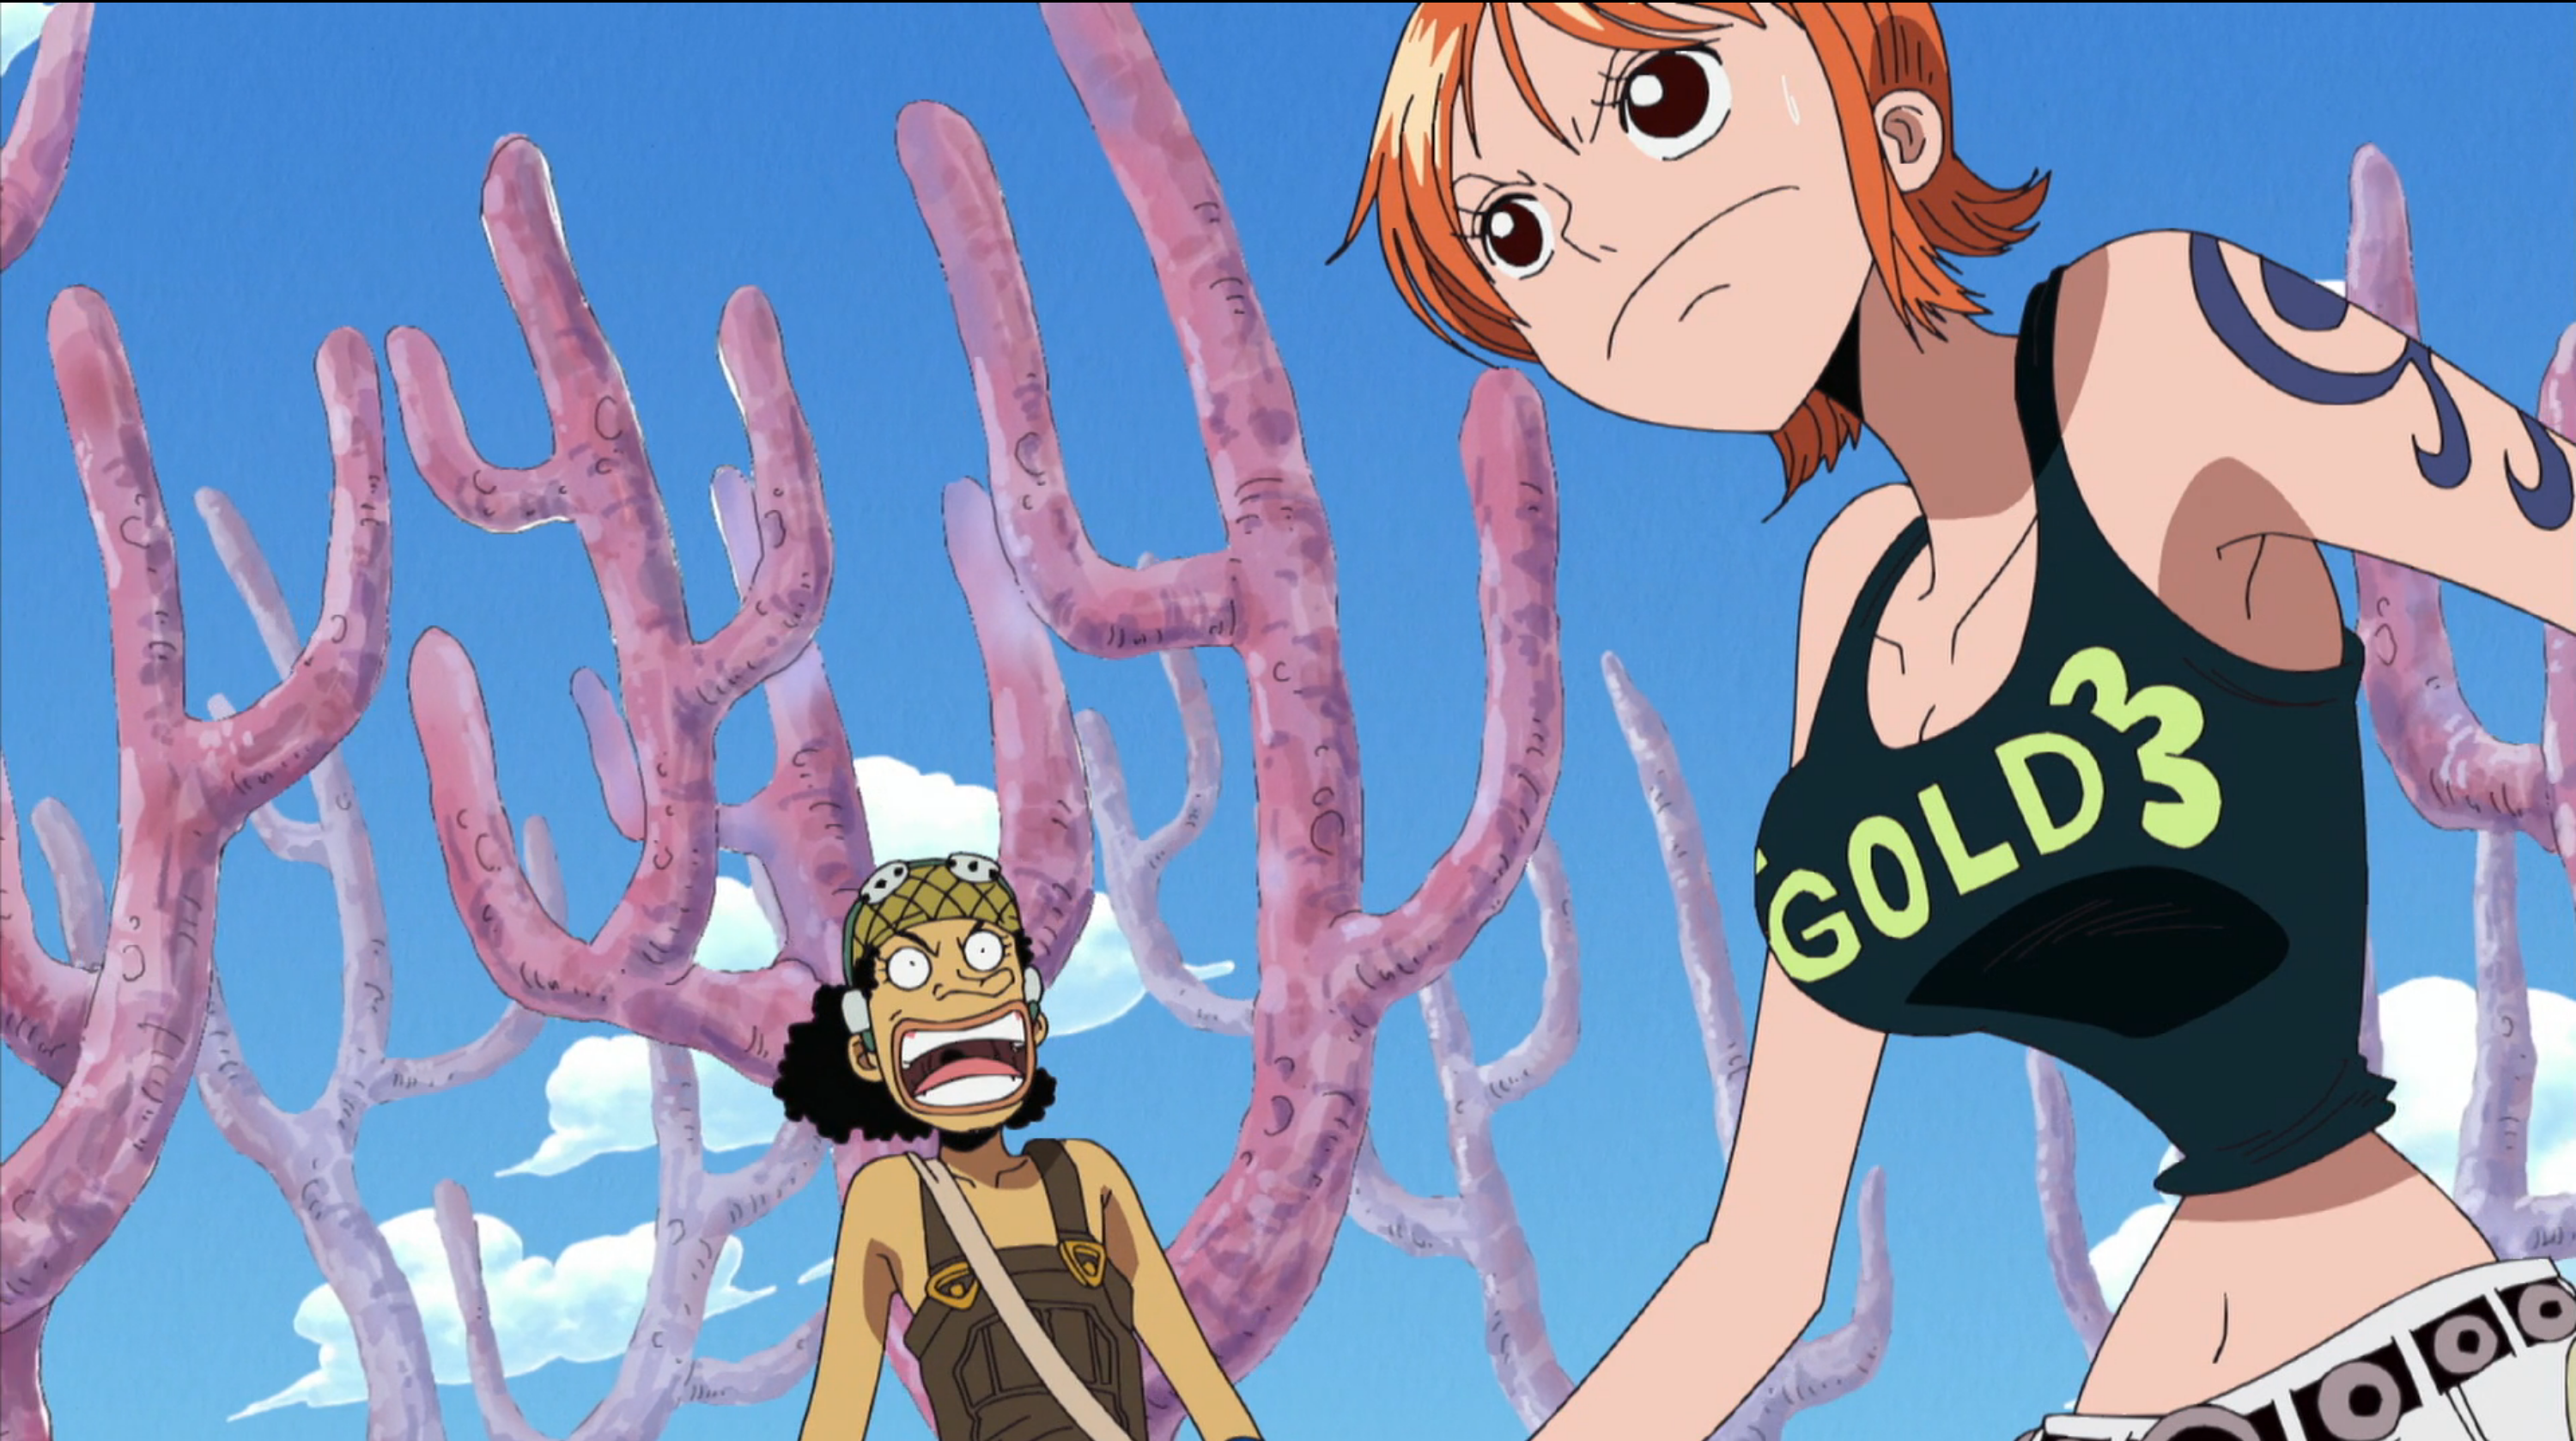 Nami navigates the coral reef as Ussop smiles nervously (Oda, Eiichiro, creator. One Piece. 1999-present. Toei Animation.).